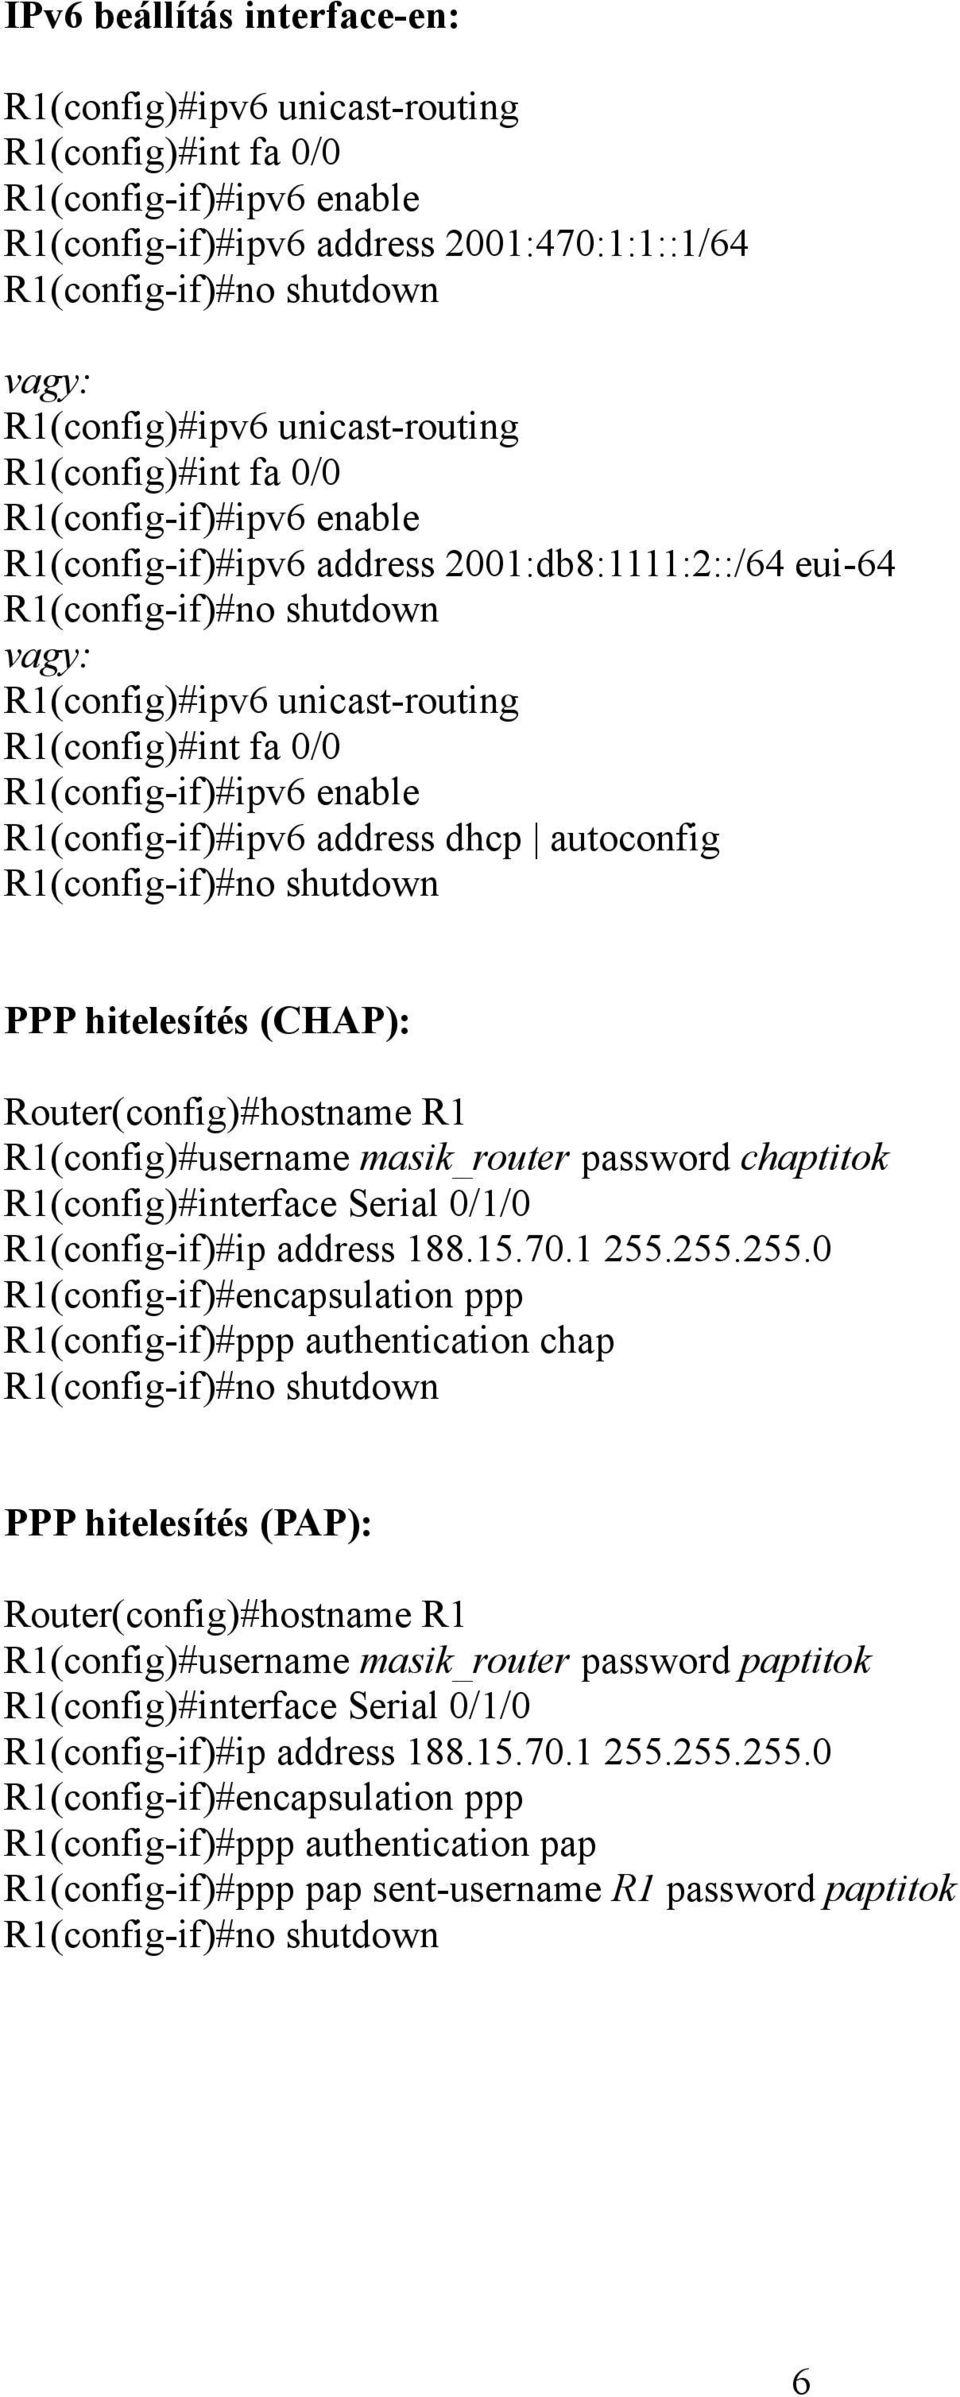 R1(config)#int fa 0/0 R1(config-if)#ipv6 enable R1(config-if)#ipv6 address dhcp autoconfig R1(config-if)#no shutdown PPP hitelesítés (CHAP): Router(config)#hostname R1 R1(config)#username